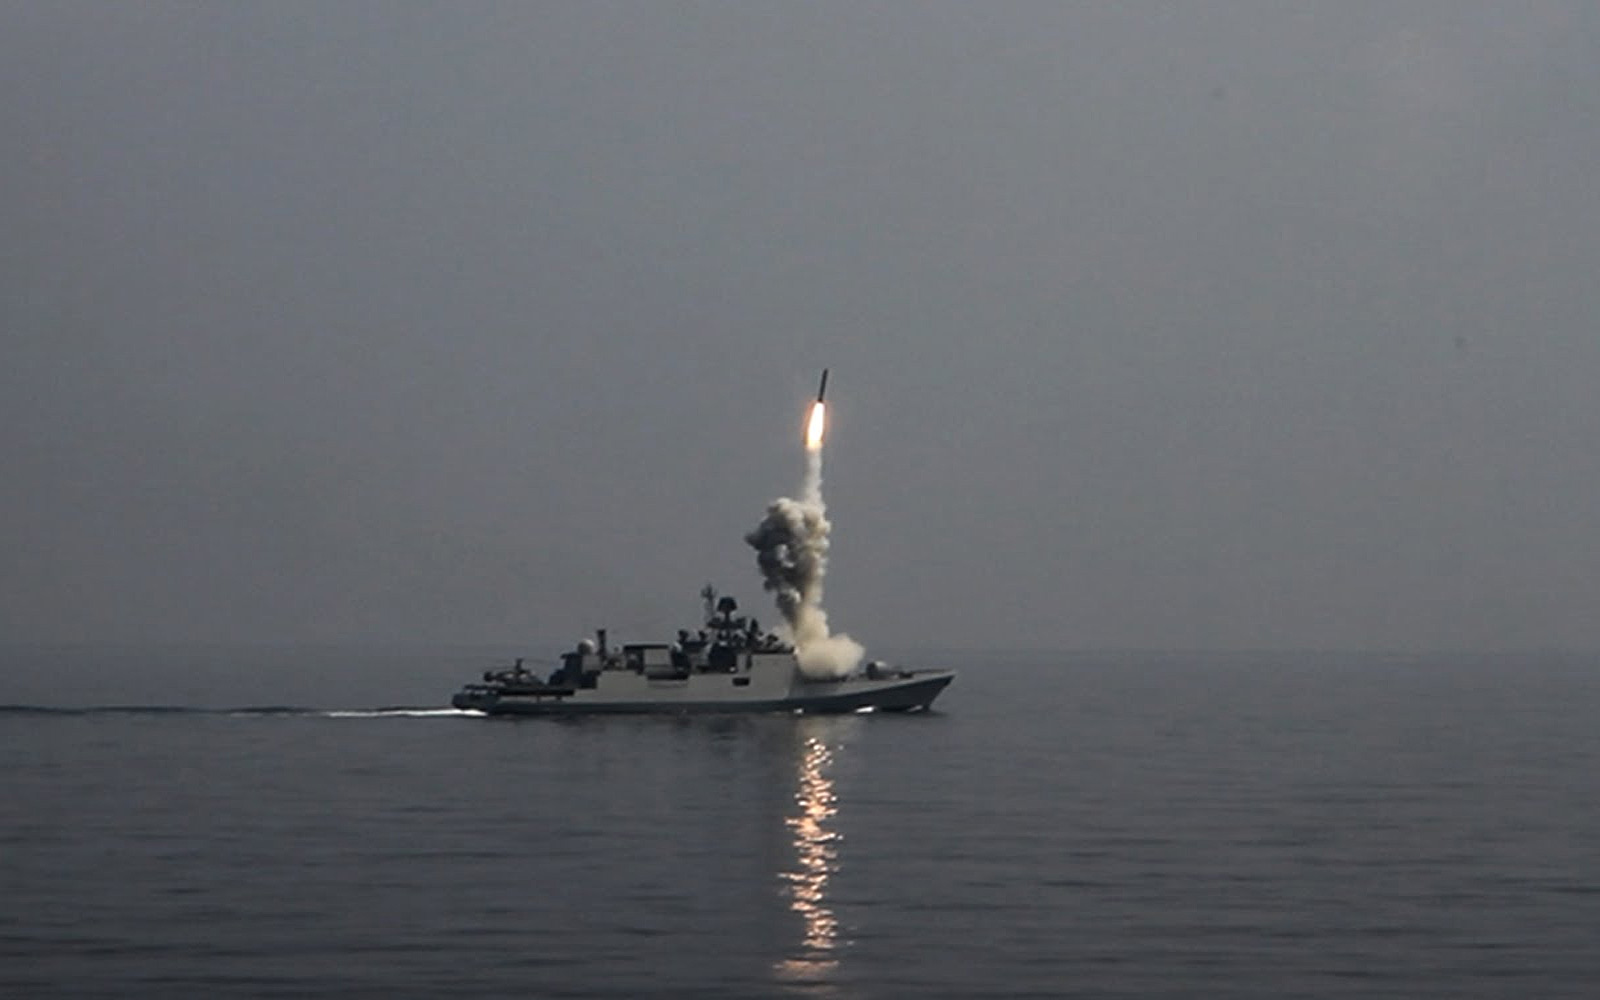 Руси послали "Адмирала Григоровича" са ракетама "калибар" у Средоземно море